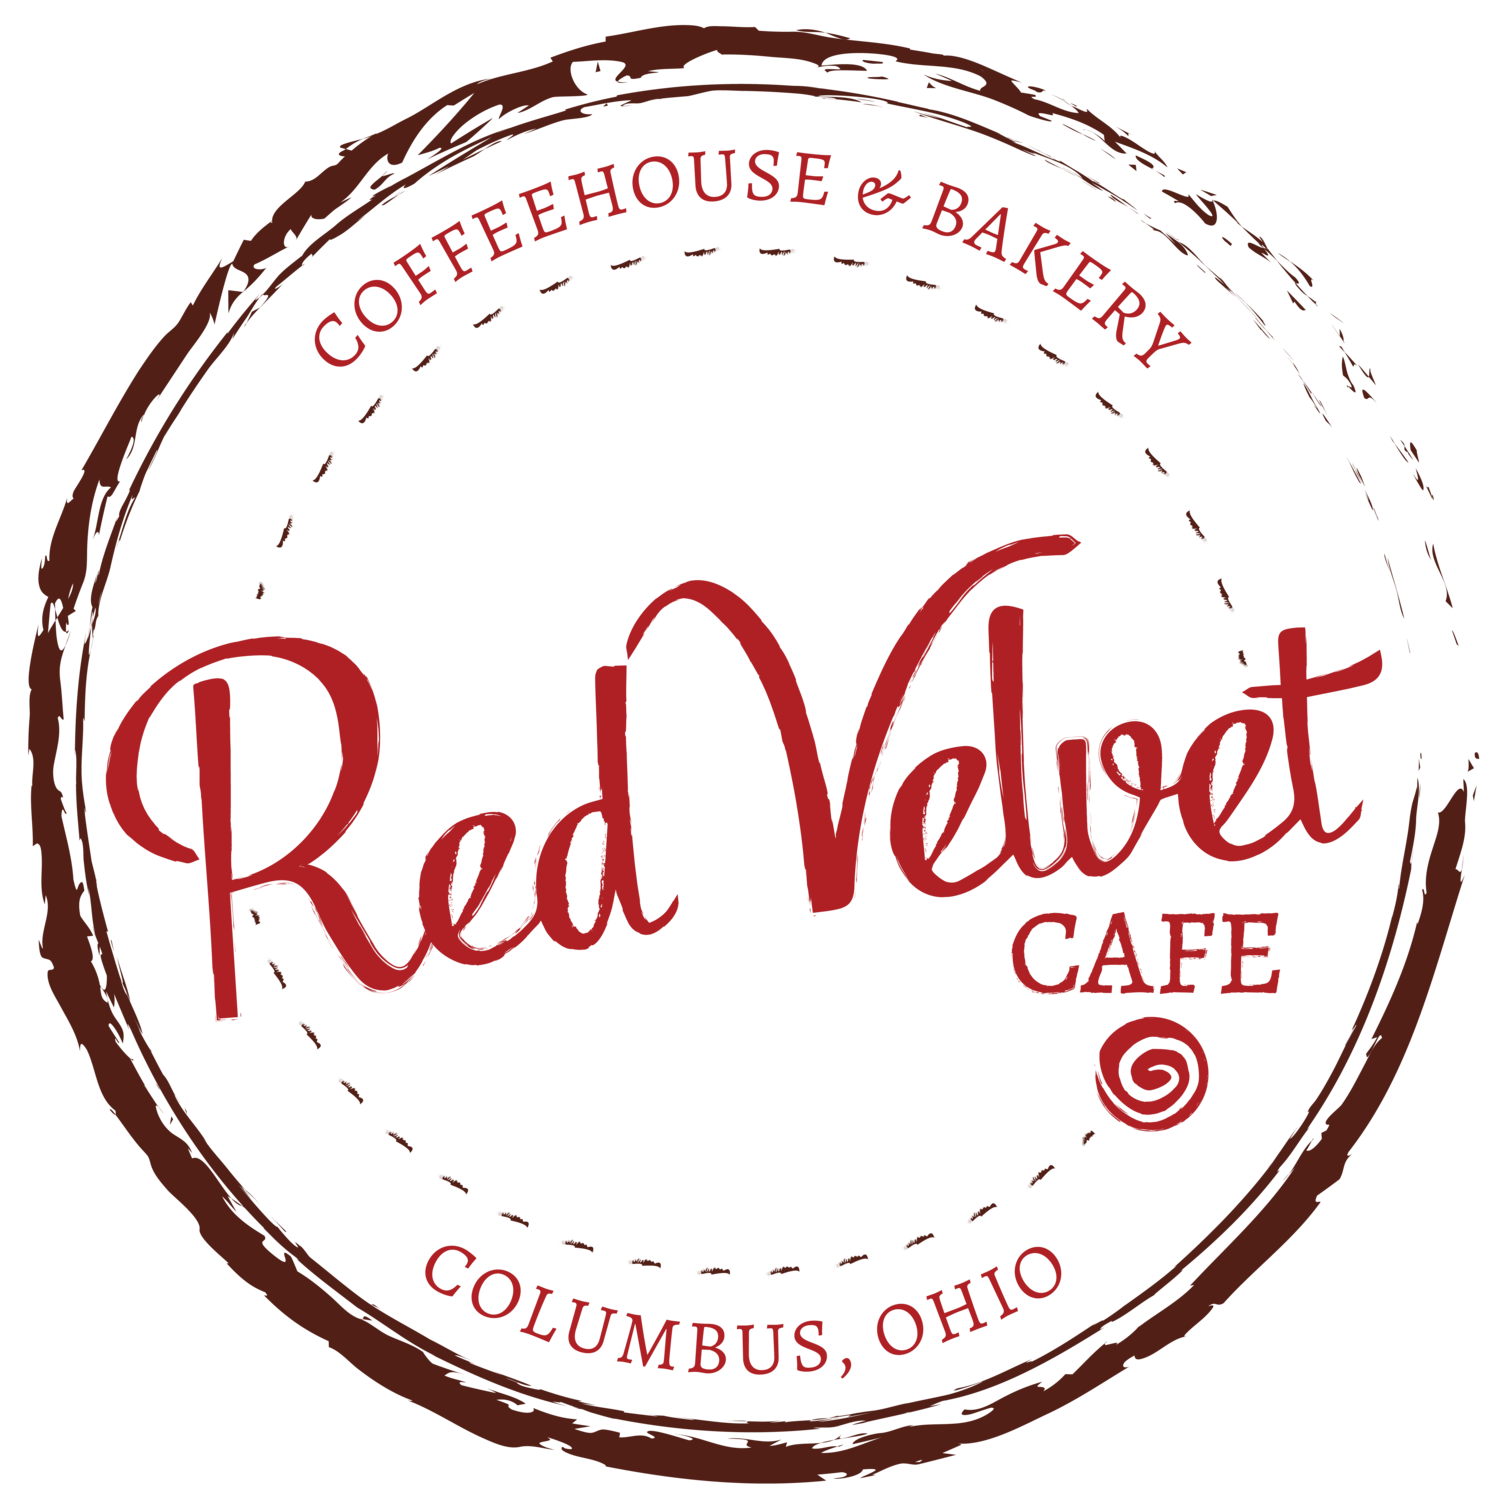 Oh my shop. Ред вельвет надпись. Red Velvet логотип. Кафе с рыжим логотипом. Кафе Red Velvet.